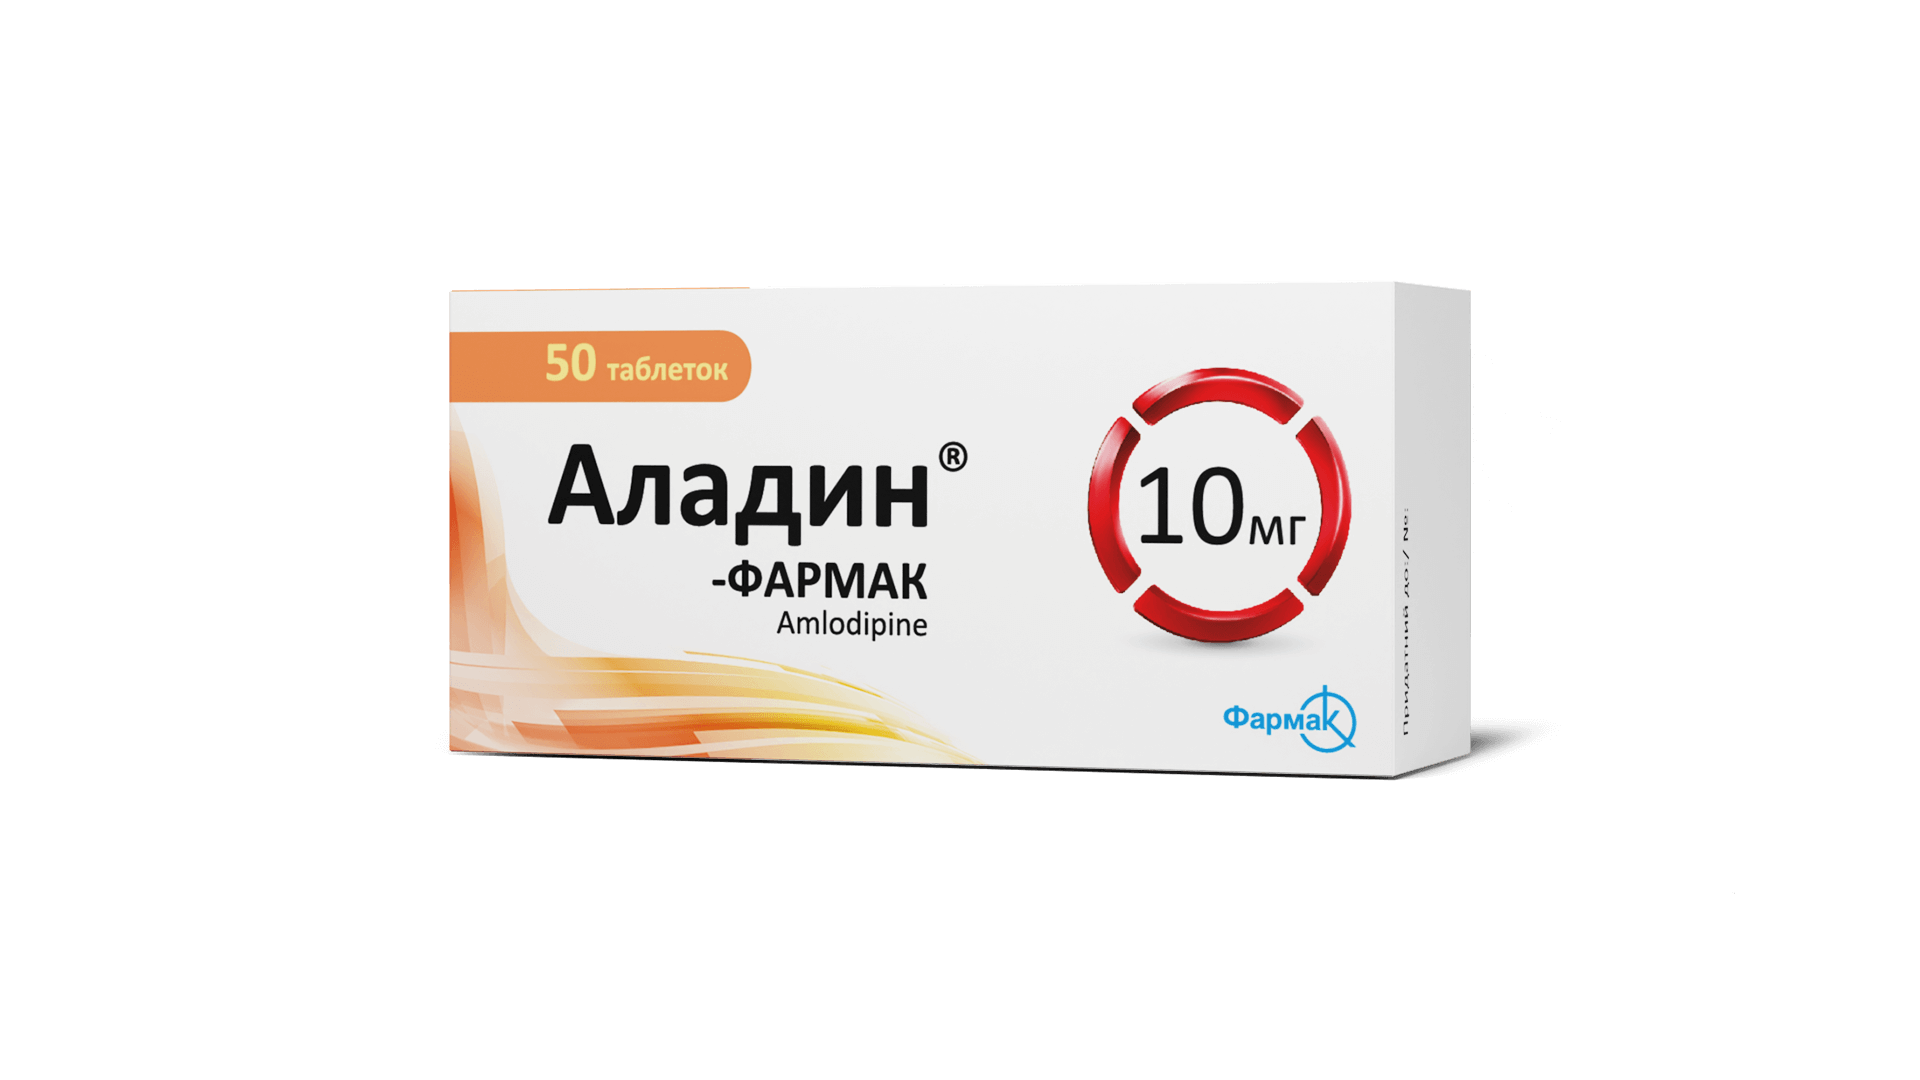 Аладин – Фармак 10 мг (6)